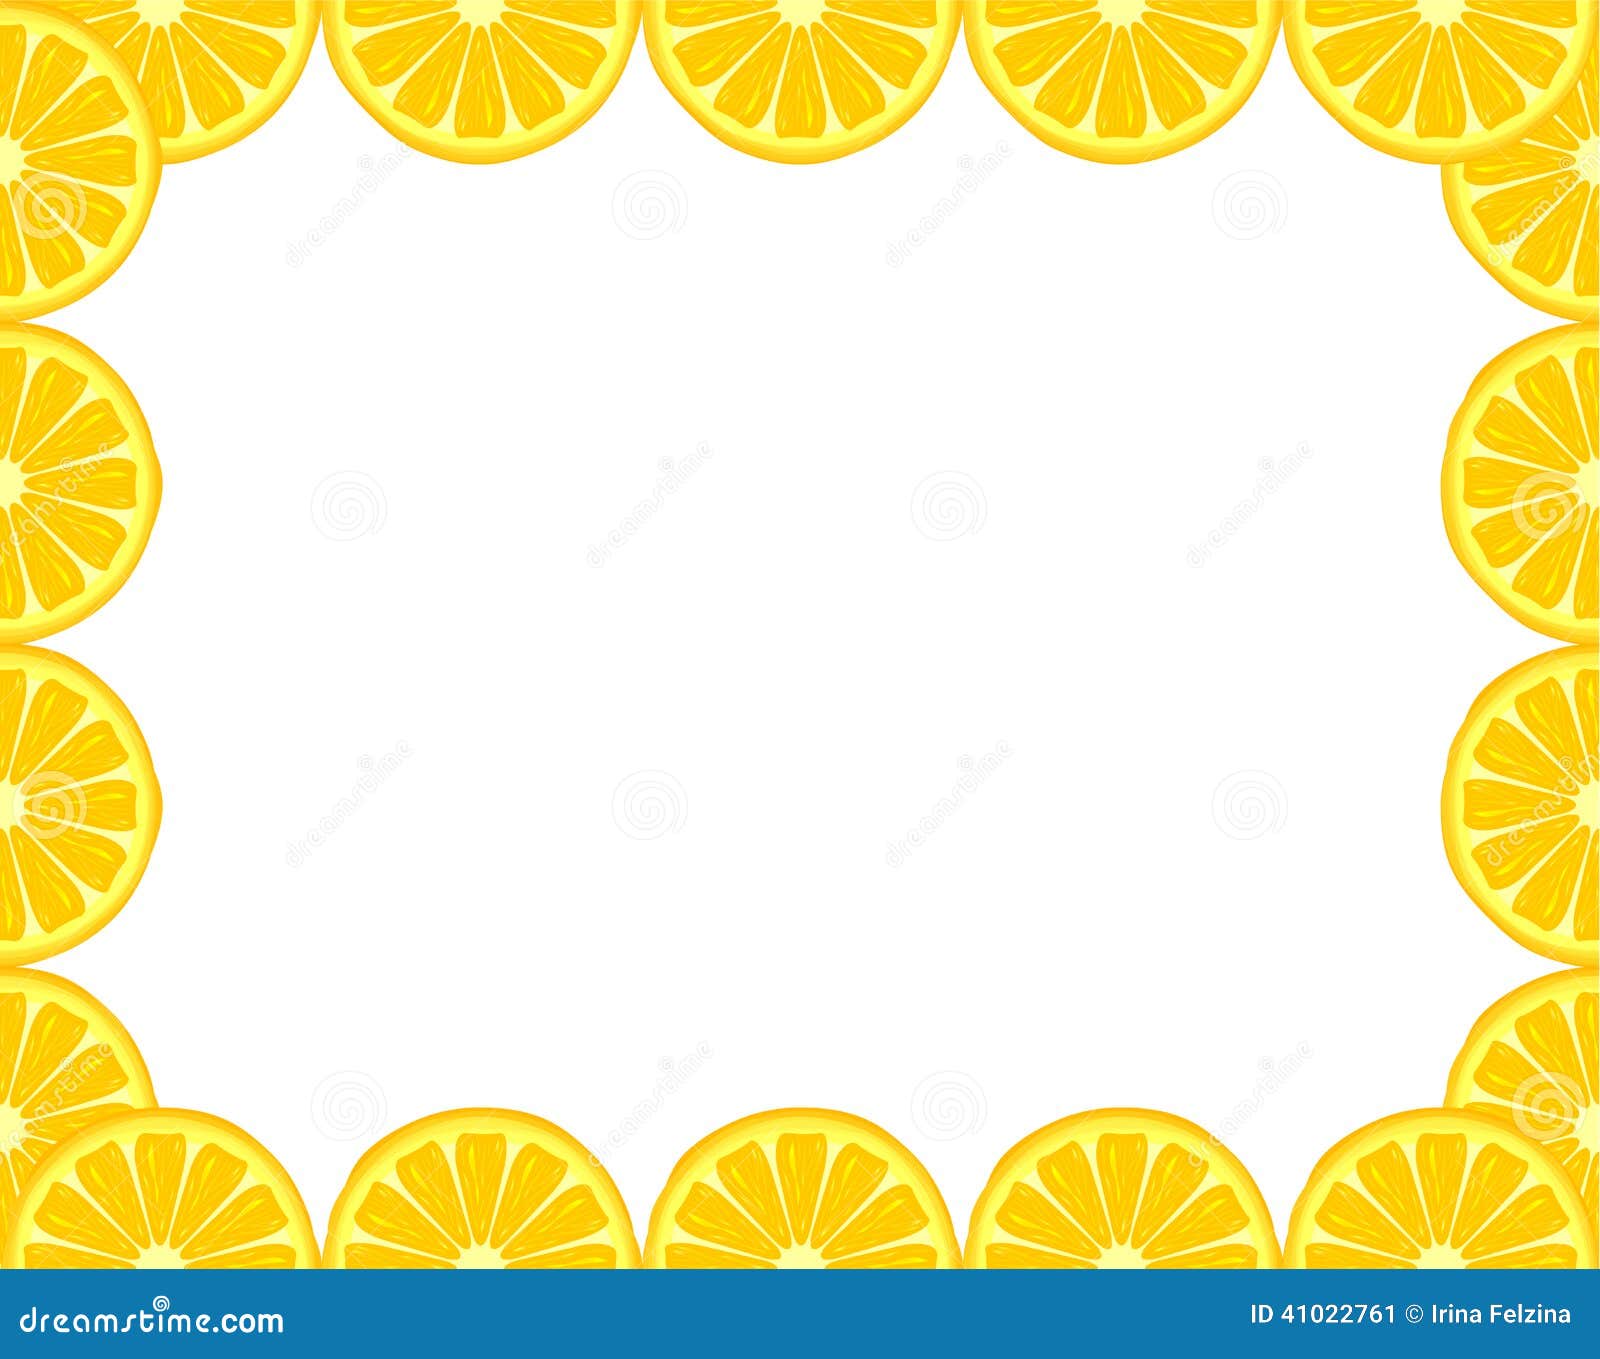 lemon border clip art - photo #12